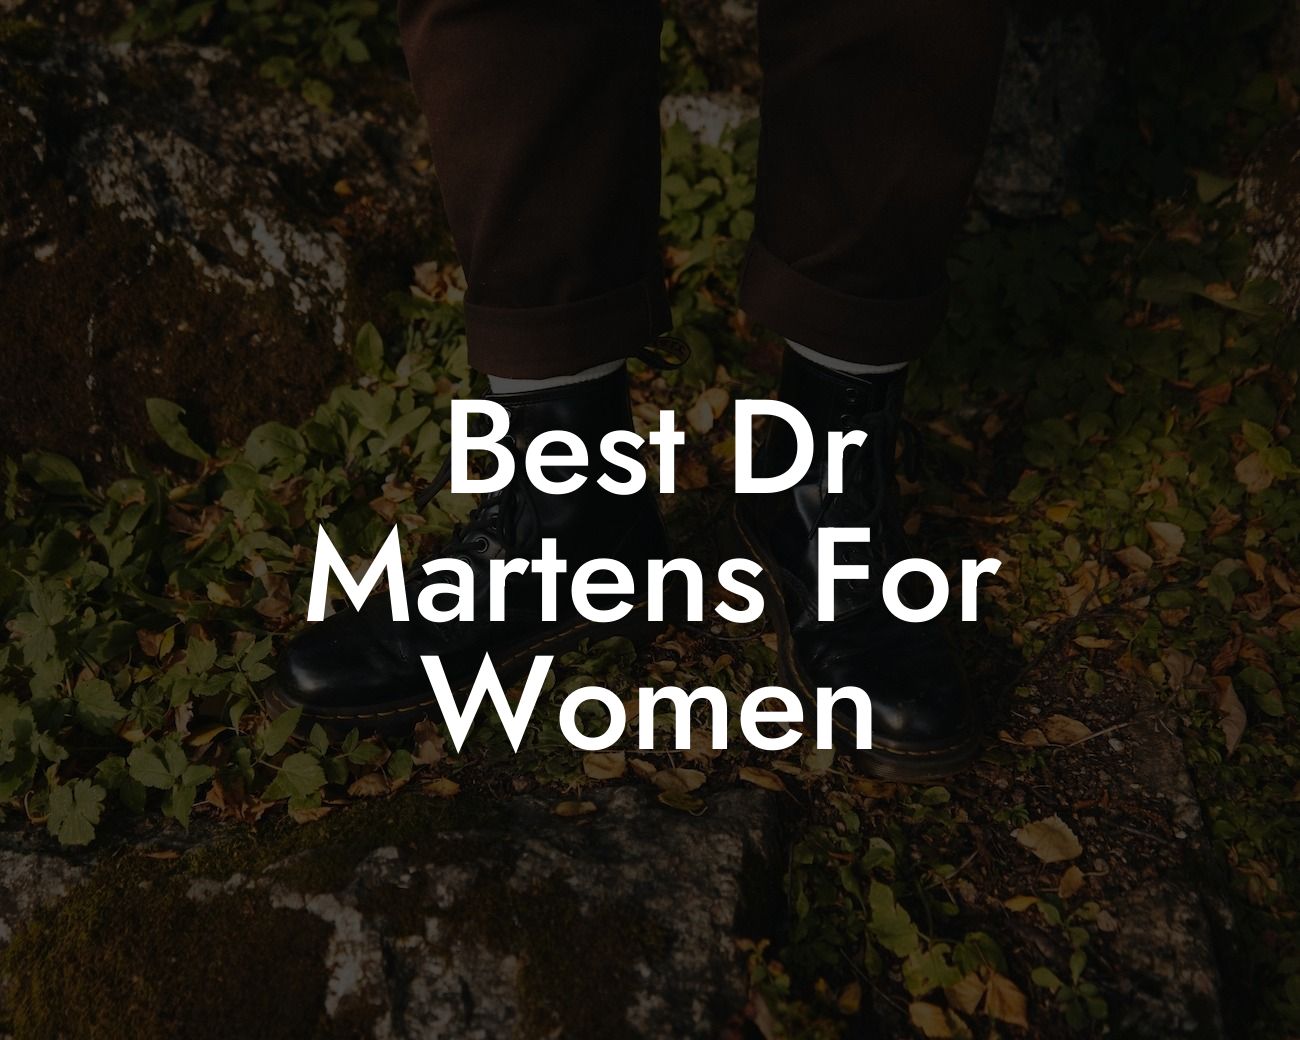 Best Dr Martens For Women